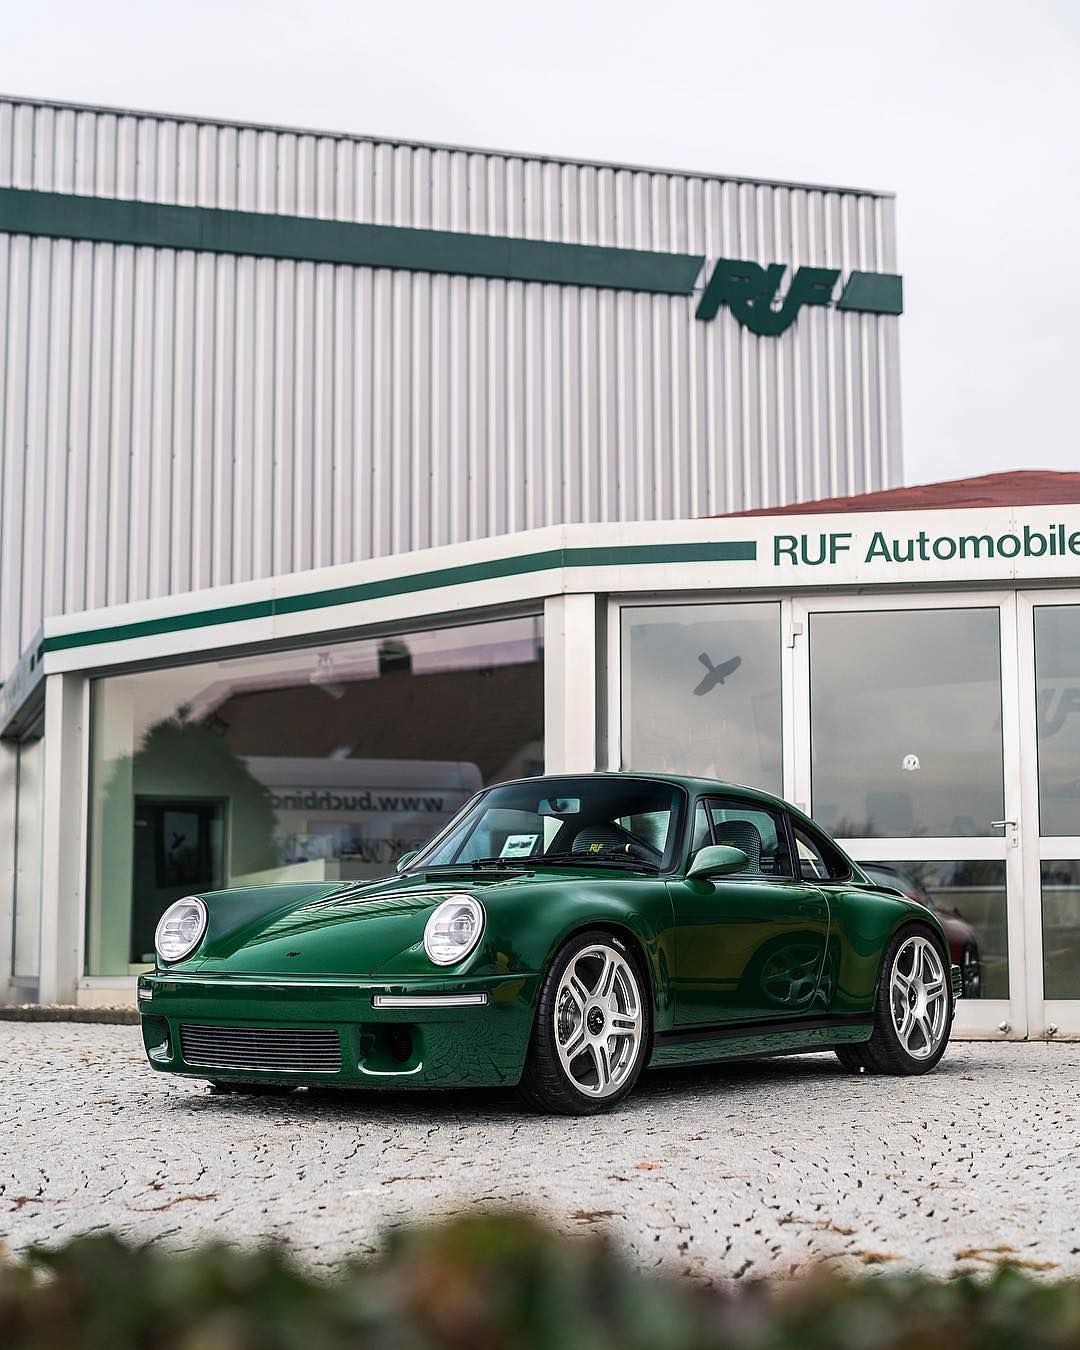 RUF Automobile GmbH on Instagram: “We have a thing for #green. #SCR #RUF #CarbonFiber PC:. Porsche, Porsche Automobile